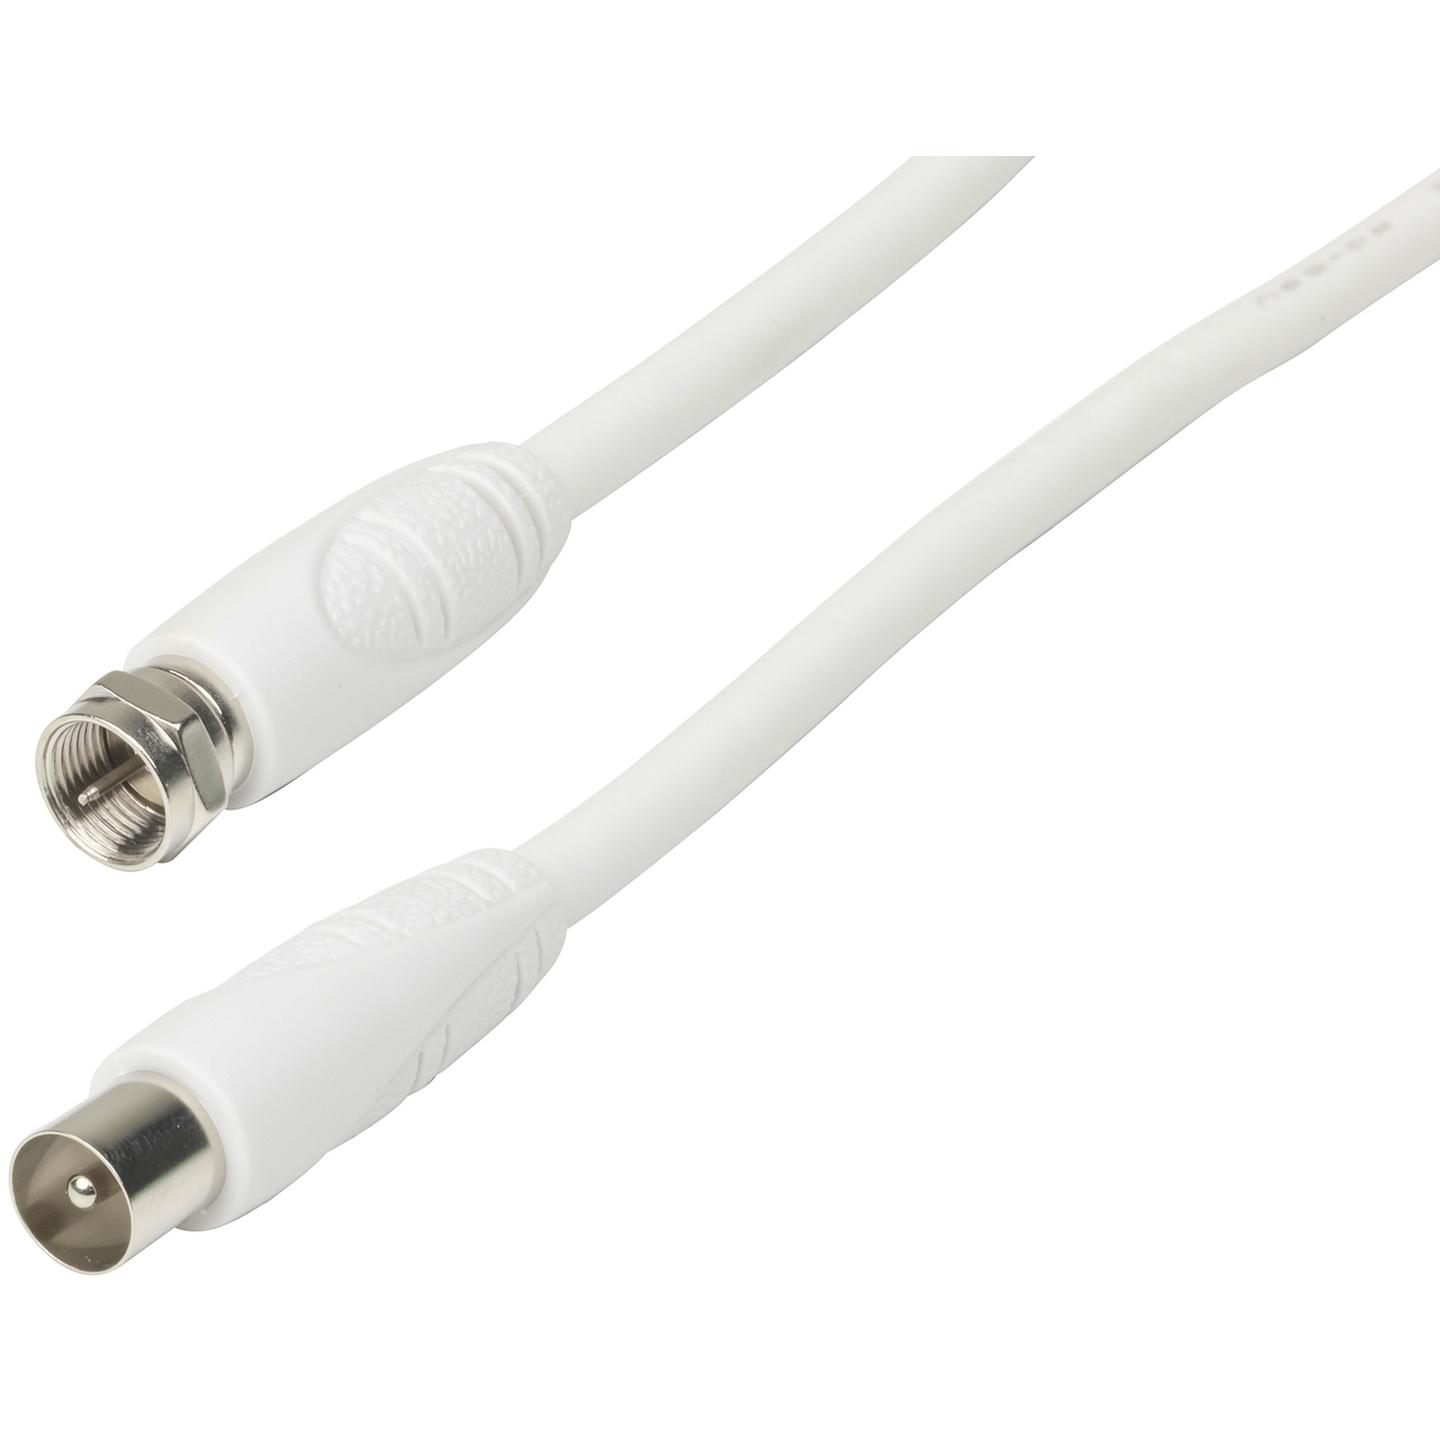 F Plug to TV Coaxial Plug Cable White - 1.5m